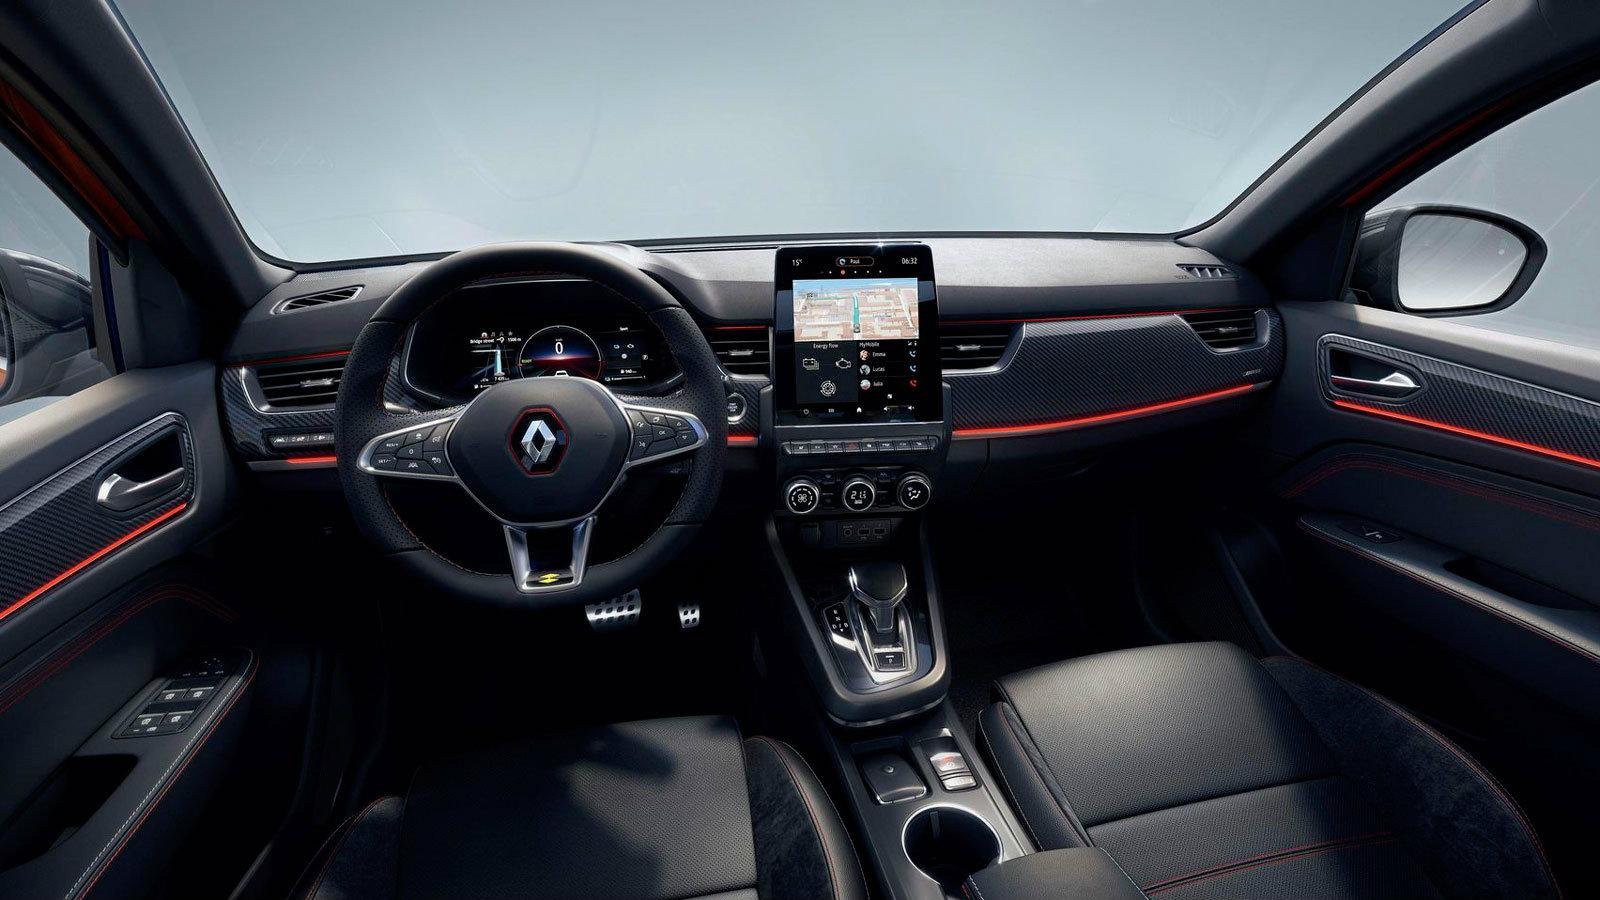 H υβριδική γκάμα της Renault  διευρύνεται με 3 νέα μοντέλα